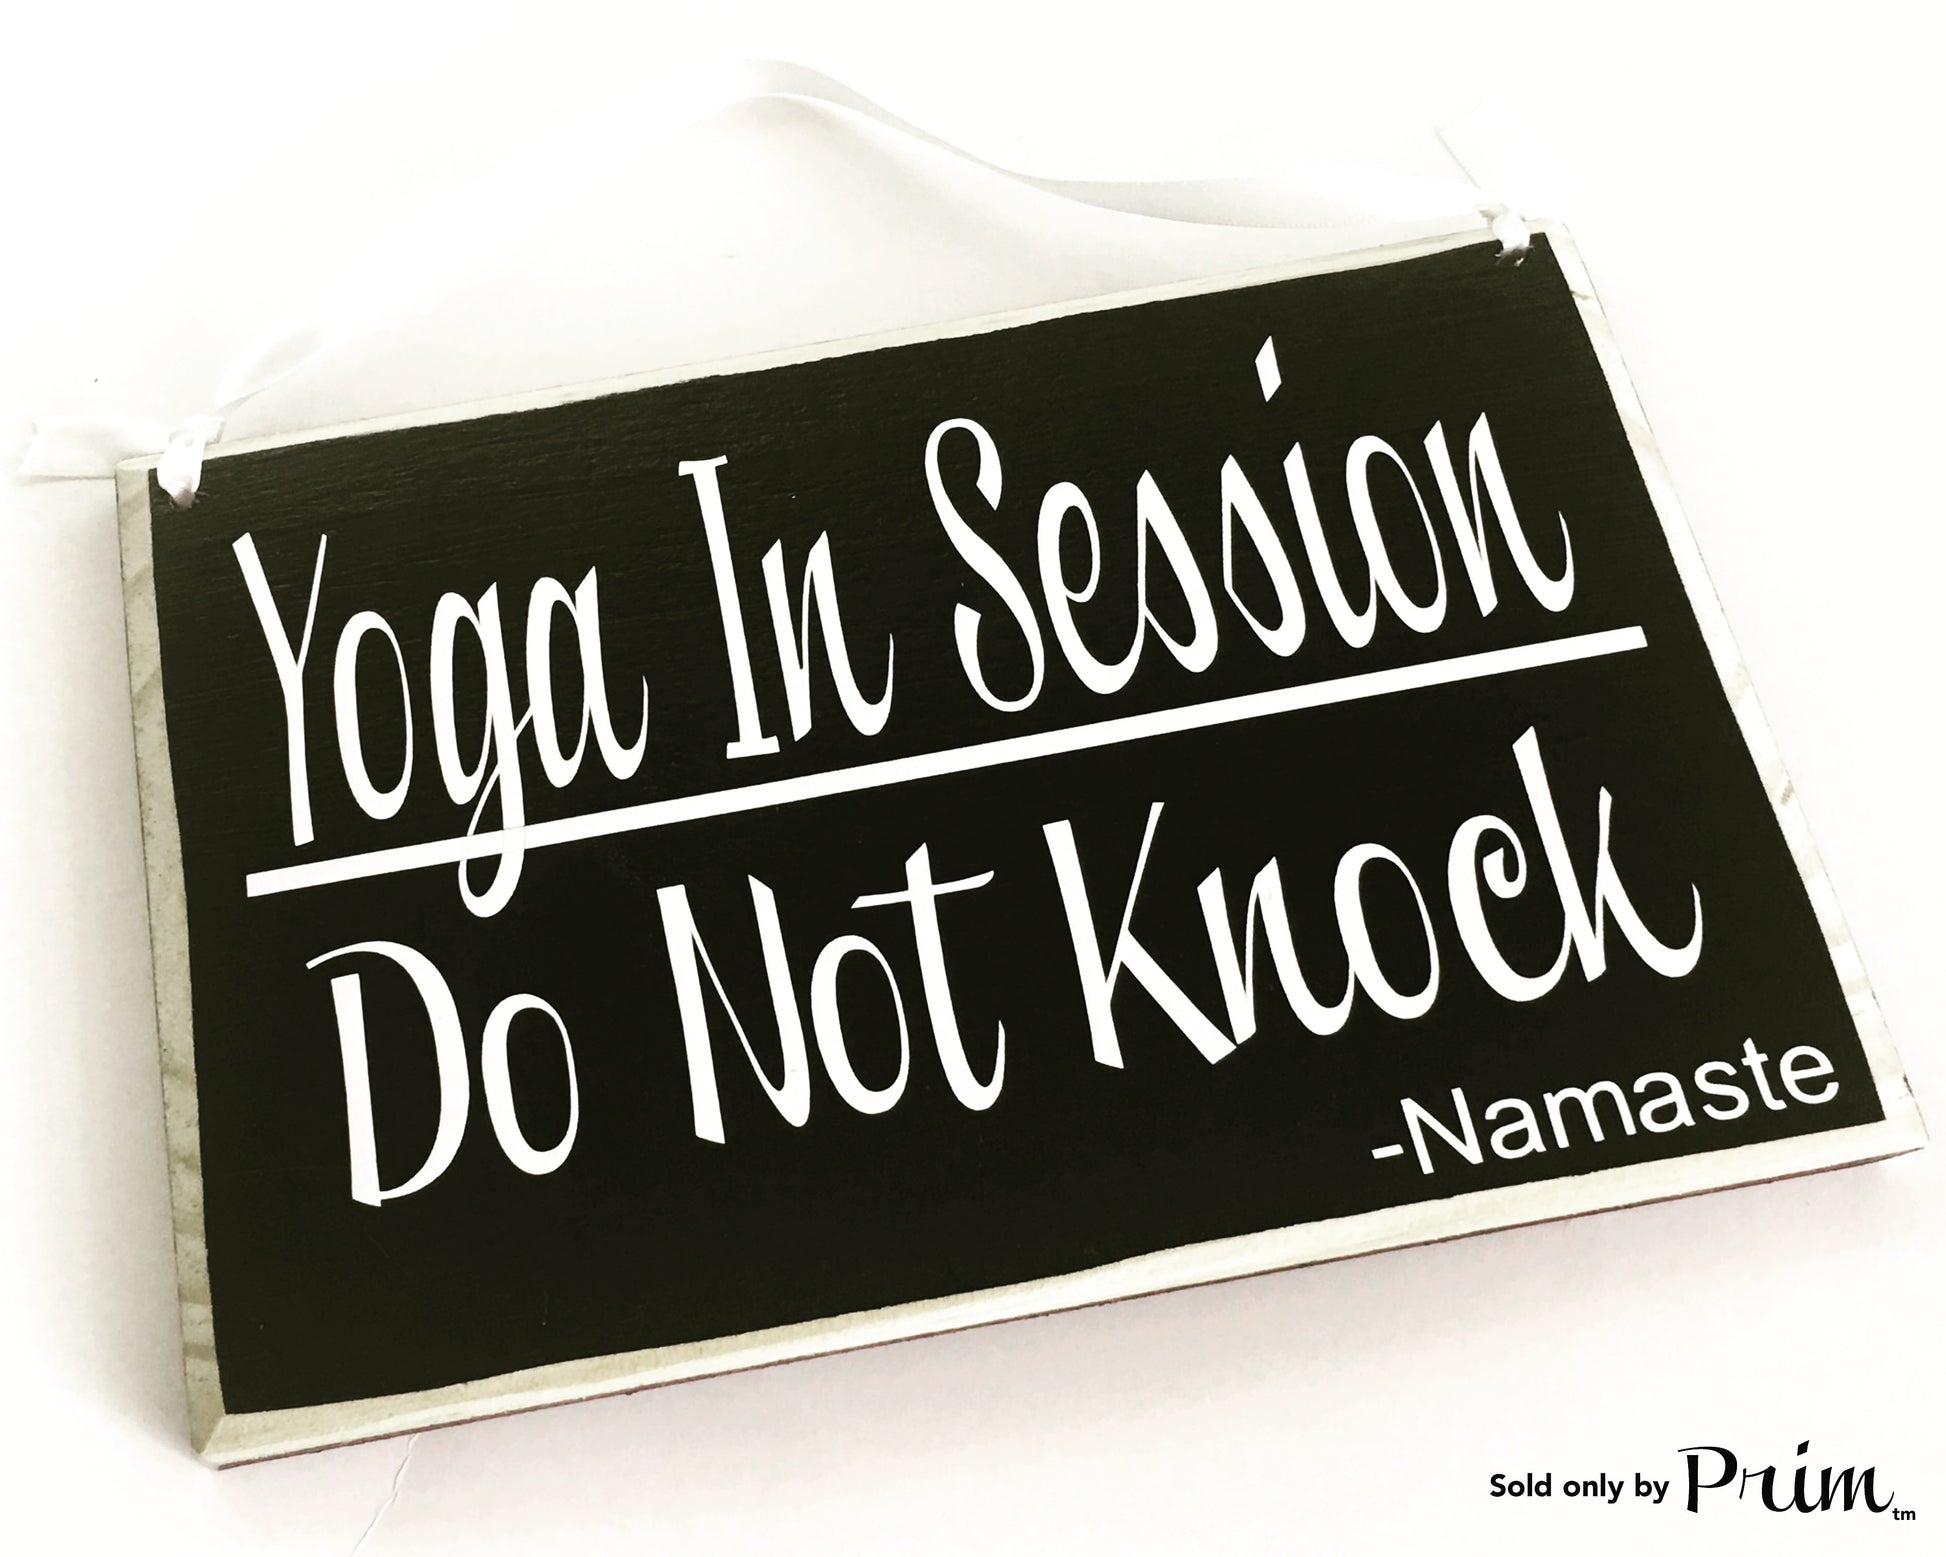 8x6 Yoga In Session Do Not Knock Namaste Custom Wood Sign Do Not Disturb Om Relaxation Spa Om Zen Meditation Door Plaque